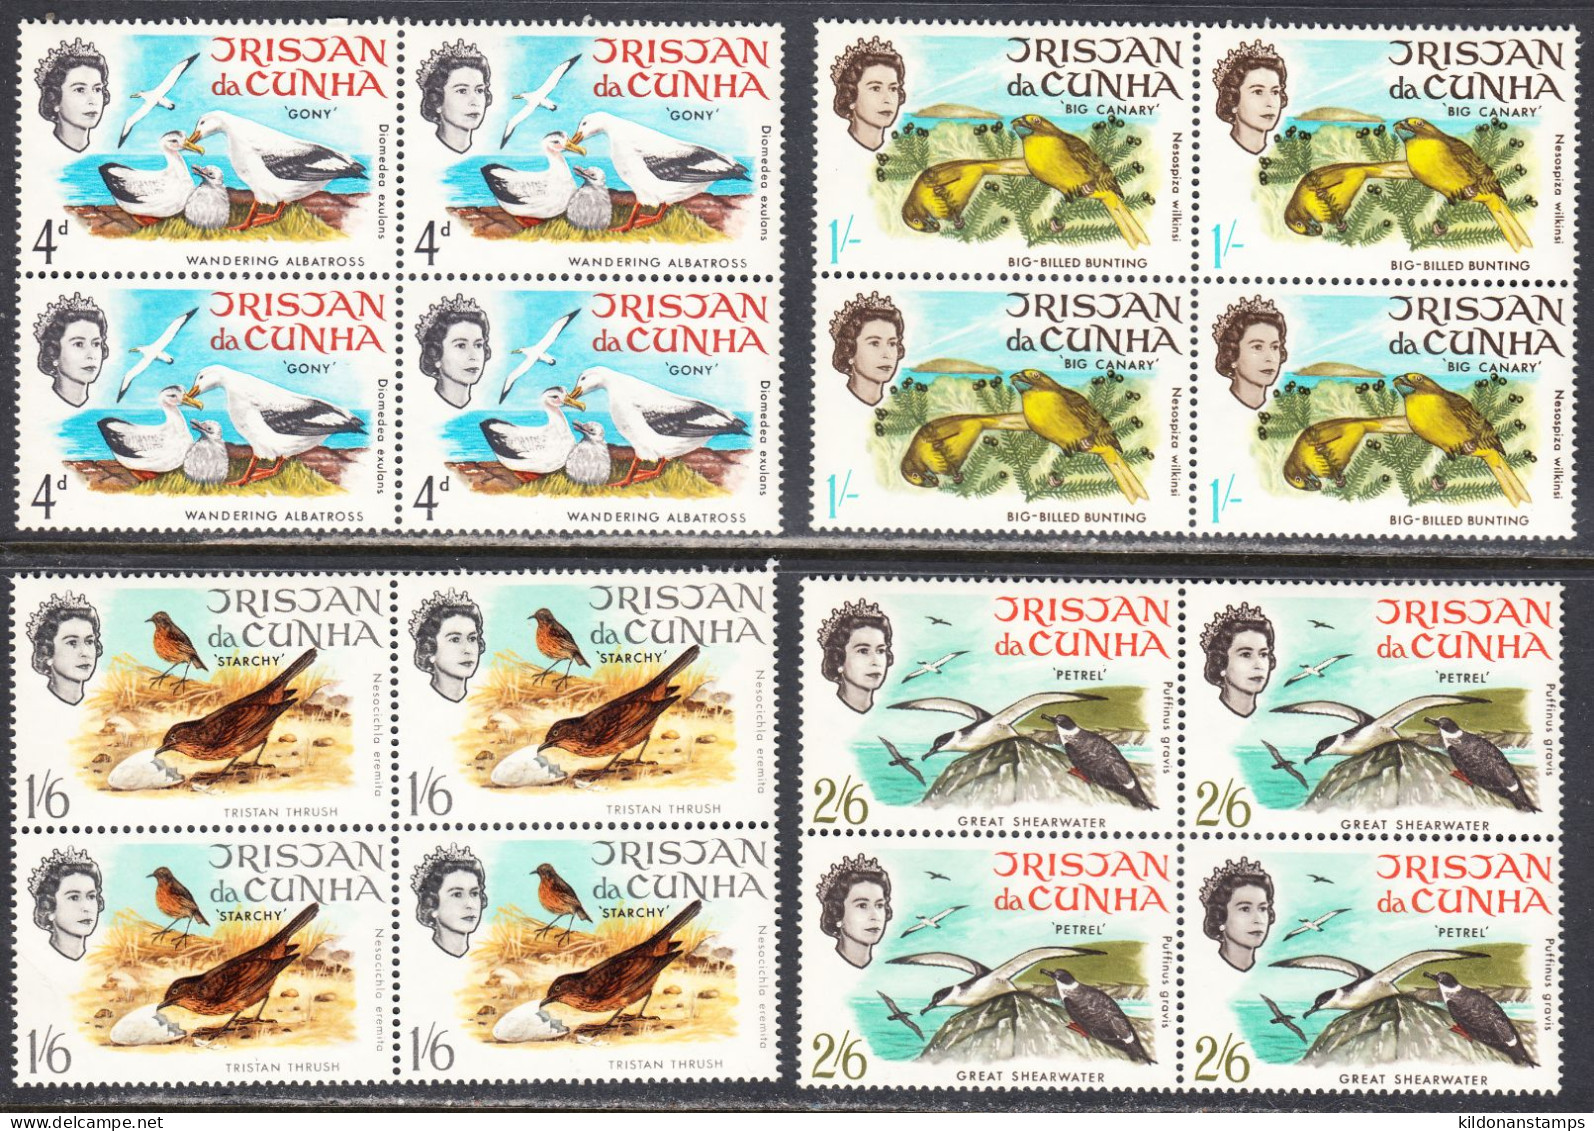 Tristan Da Cunha 1968 Mint No Hinge, Blocks, Sc# 116-119, SG 113-116 - Tristan Da Cunha